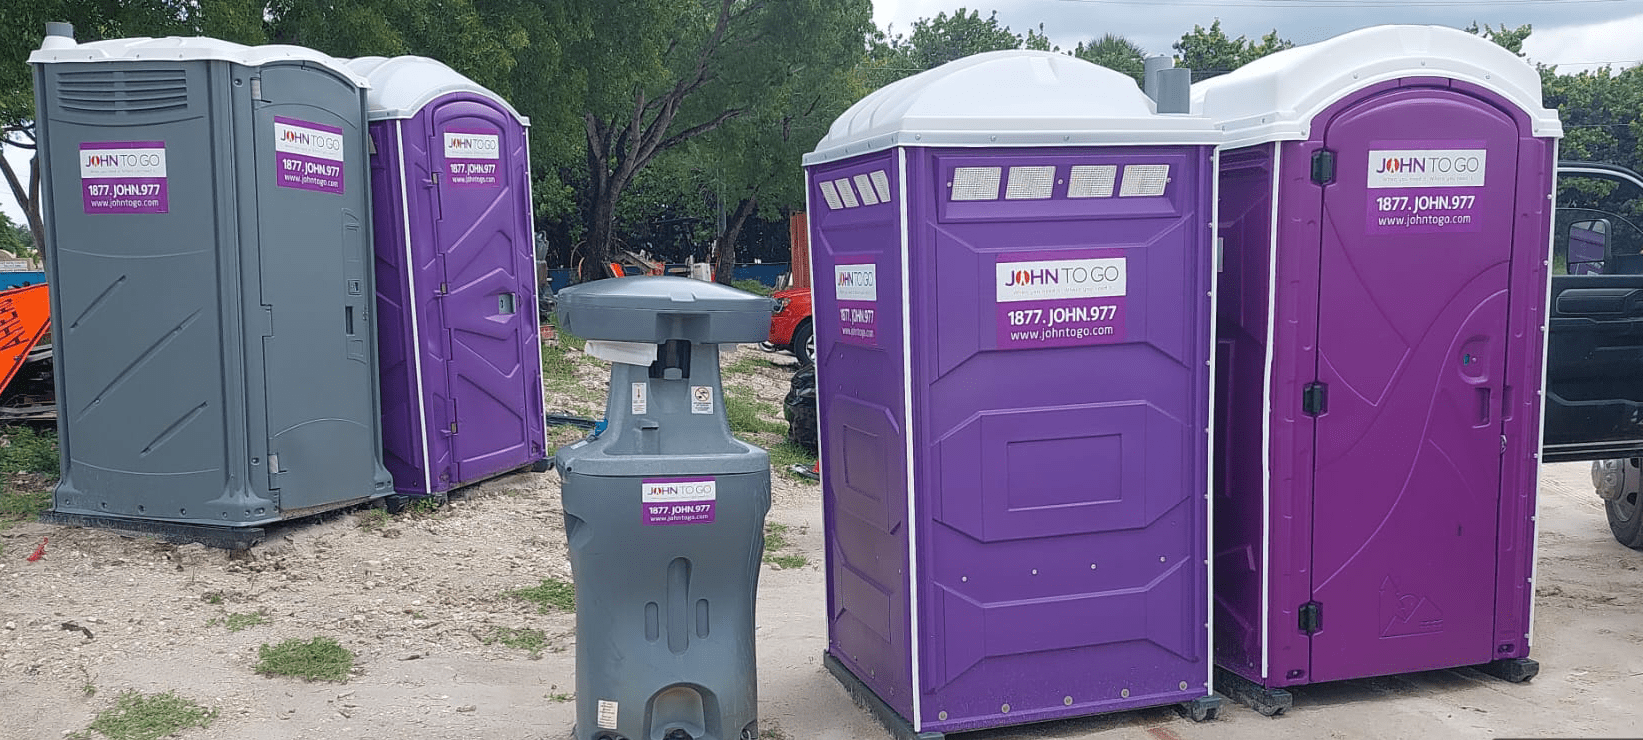 porta potty rental units and handwashing station